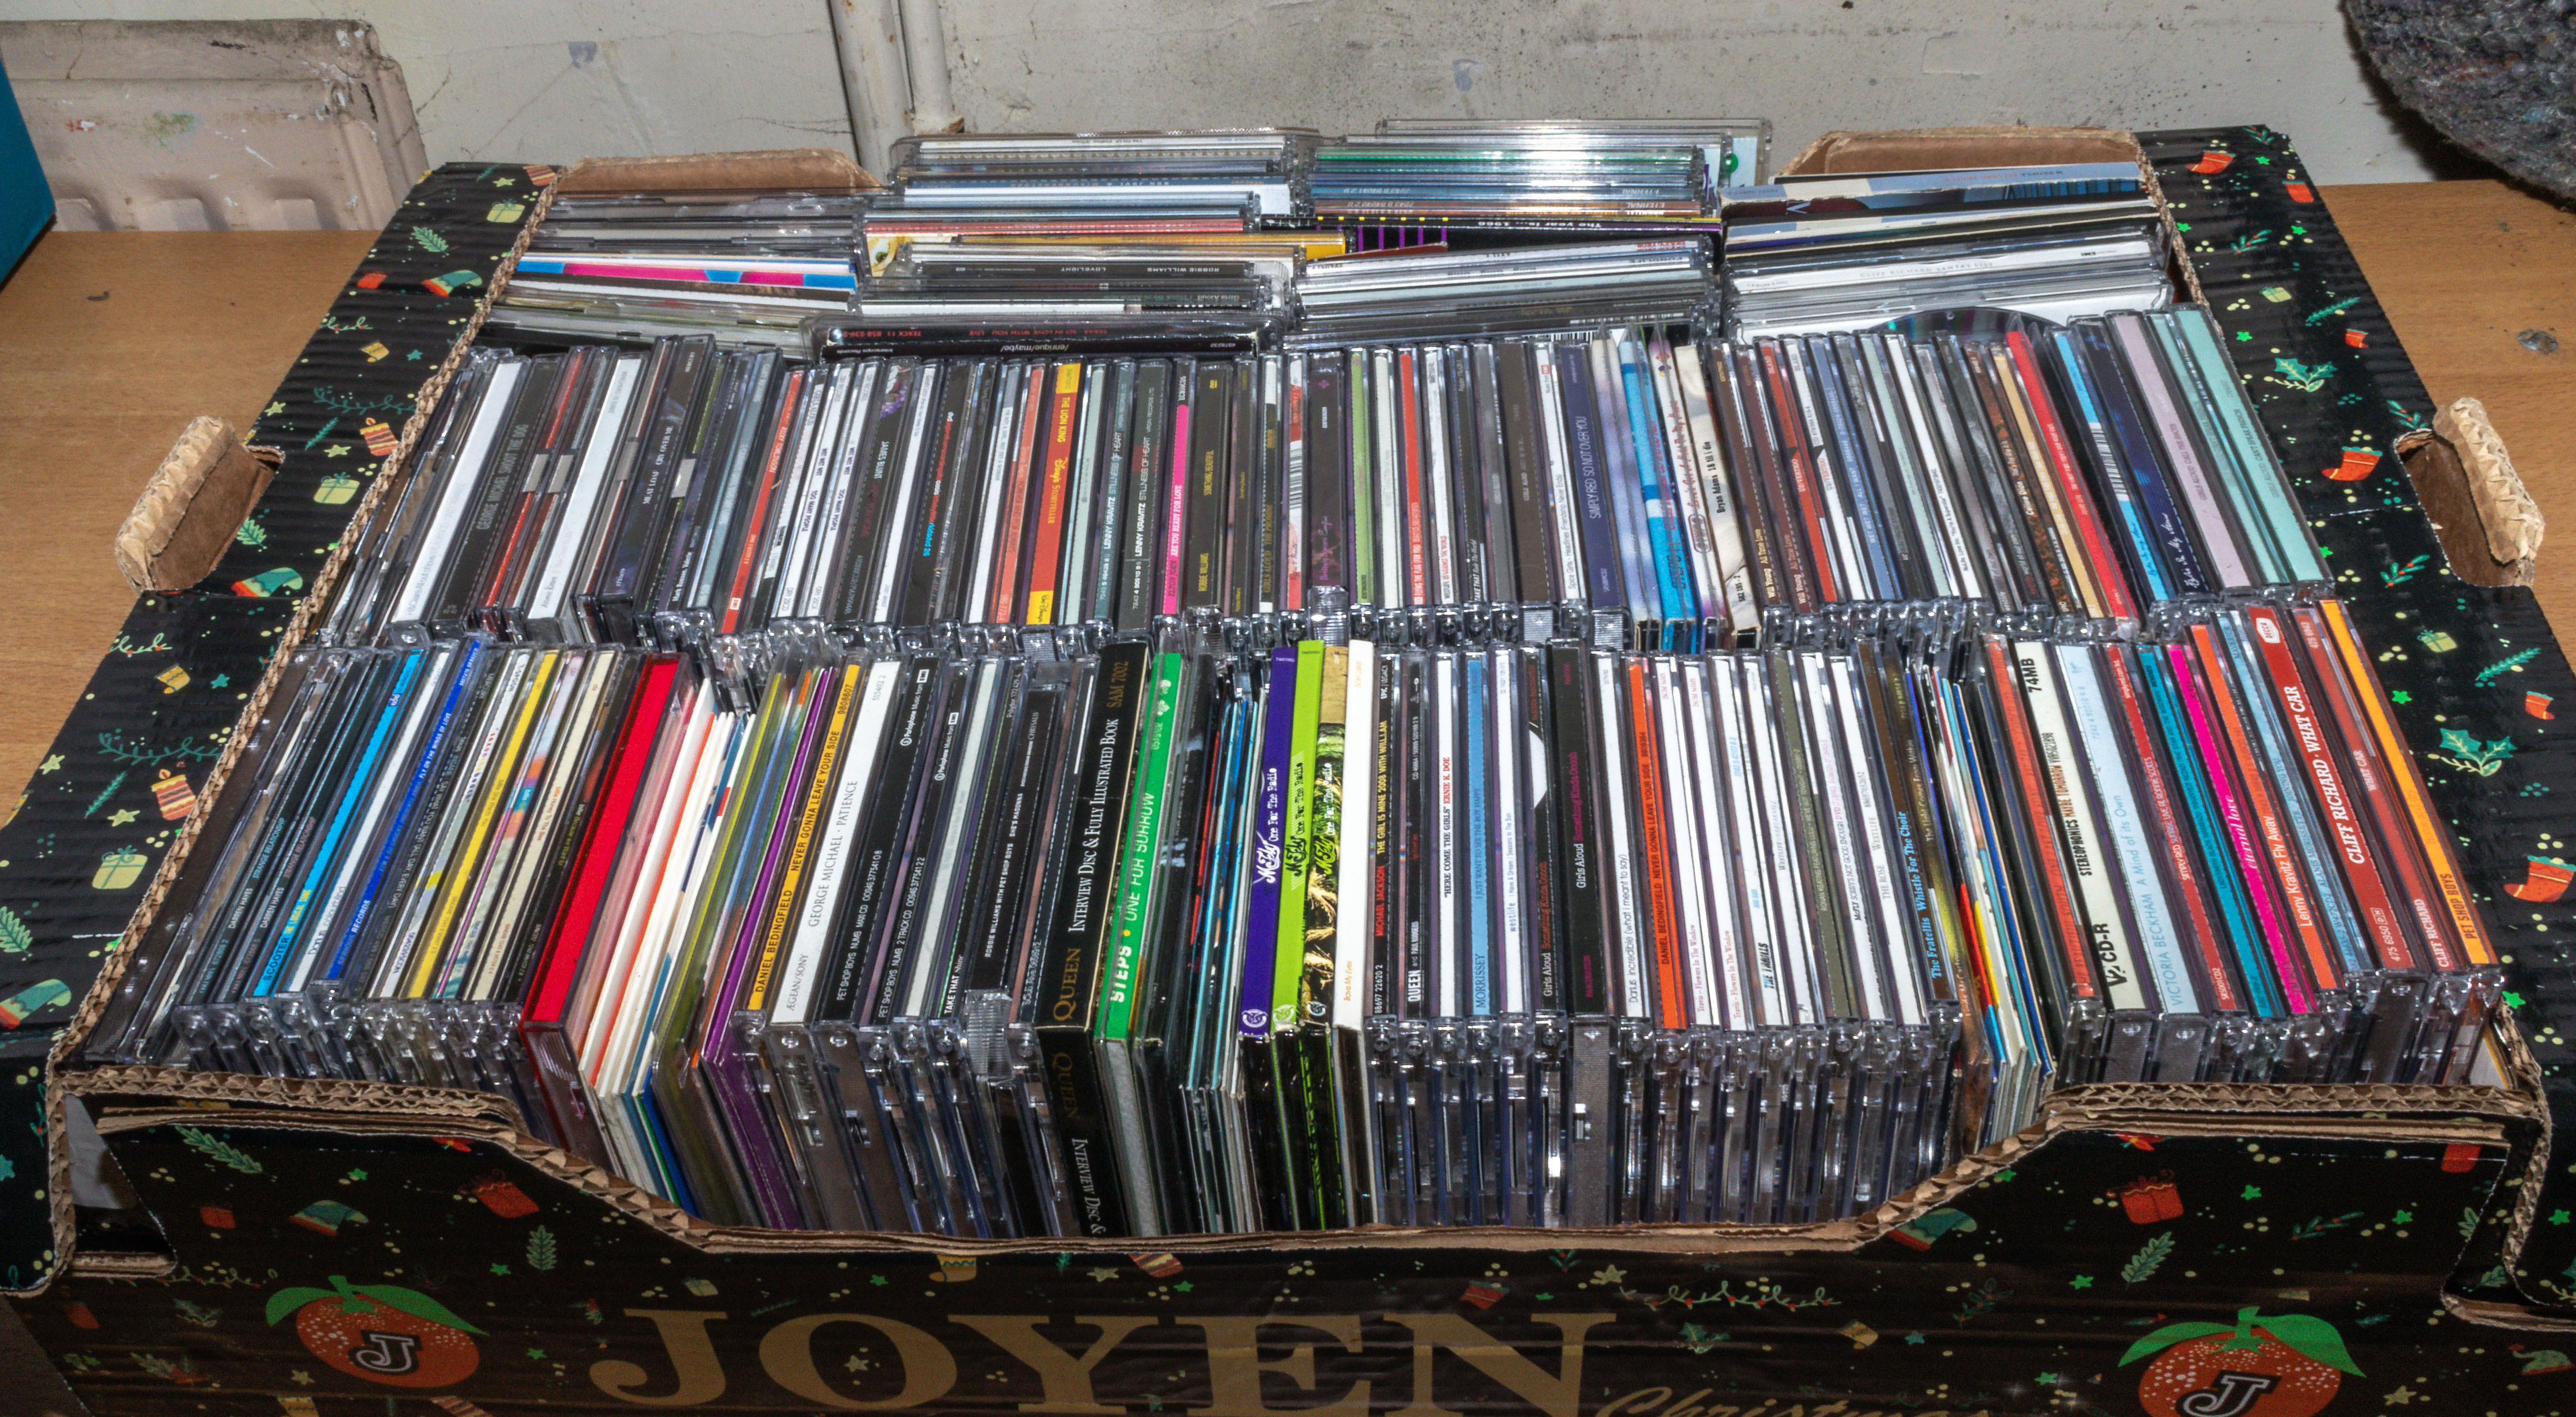 A quantity of music CD's